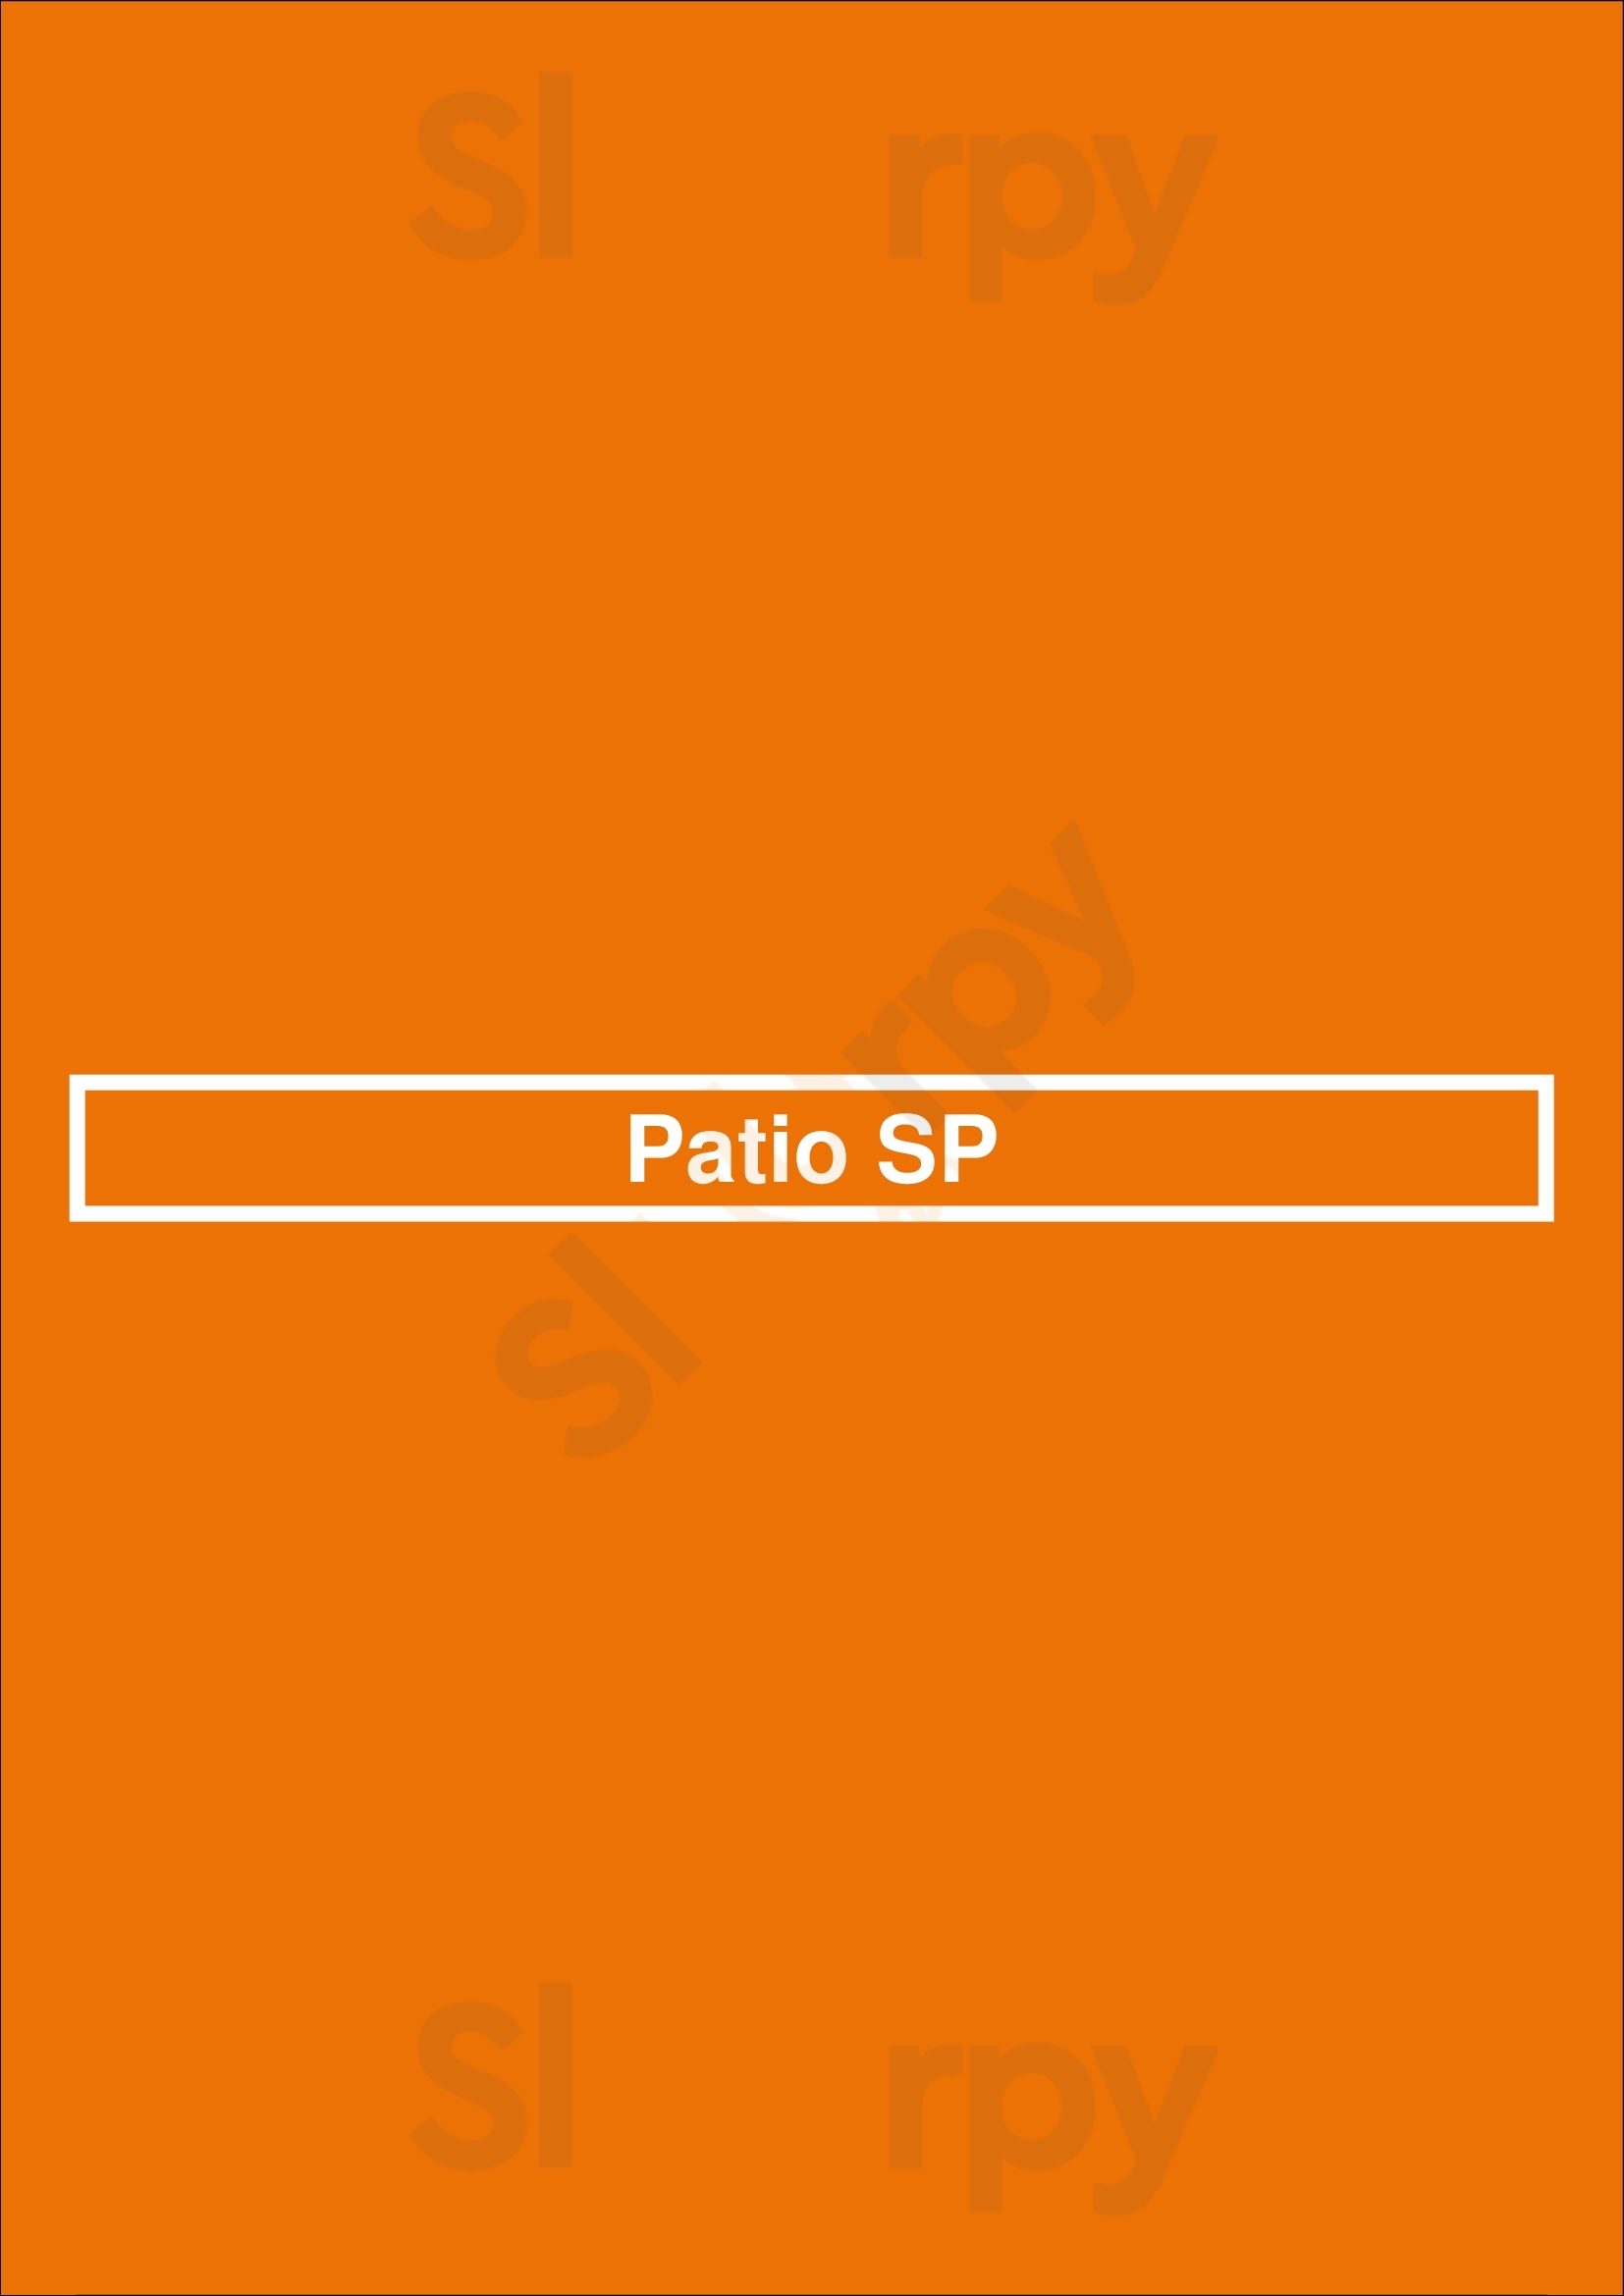 Patio Sp São Paulo Menu - 1